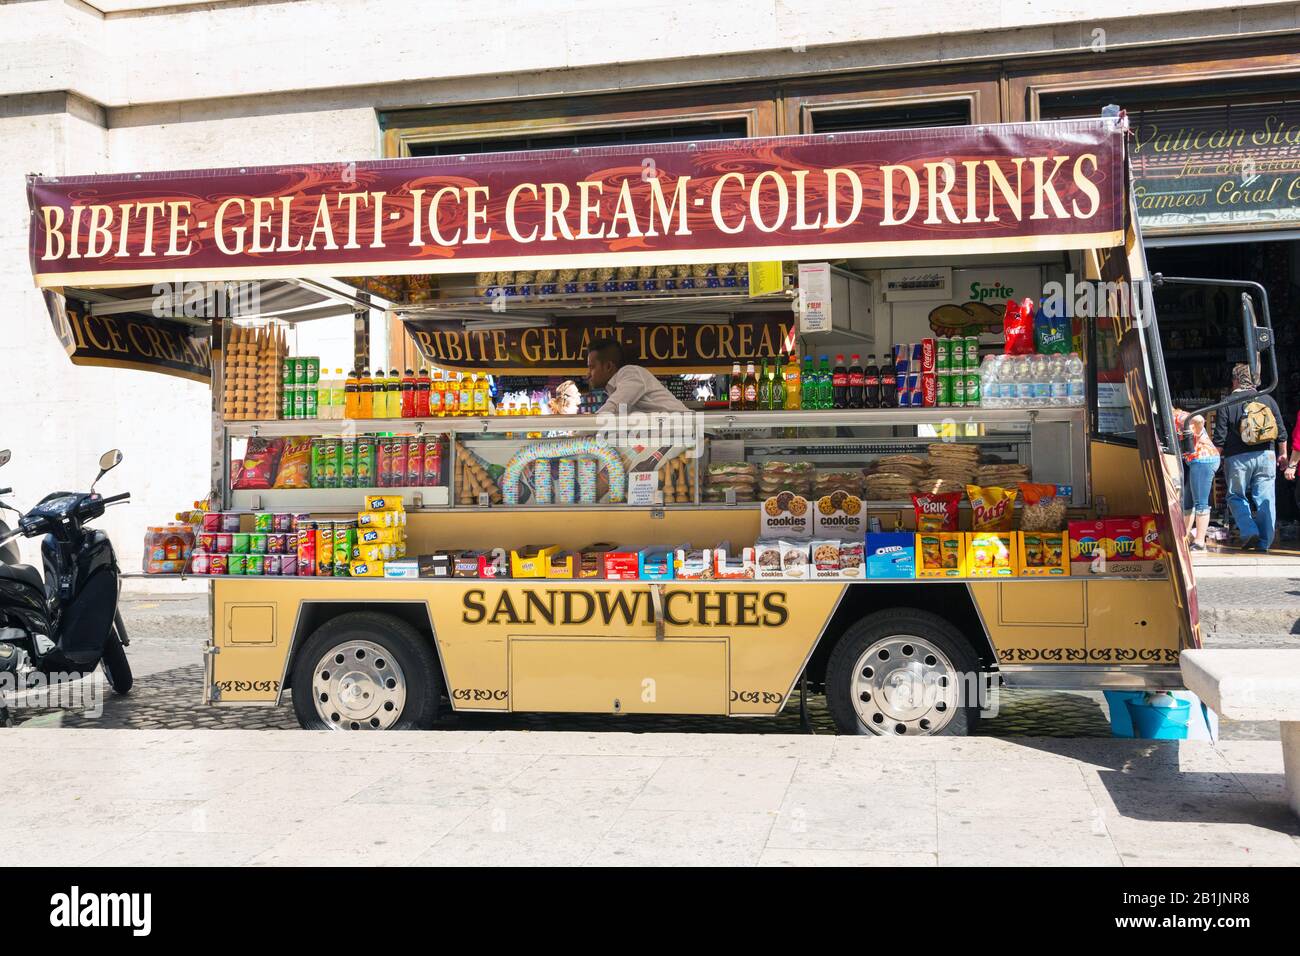 Ice cream, gelati and drinks seller van in Rome, Italy Stock Photo